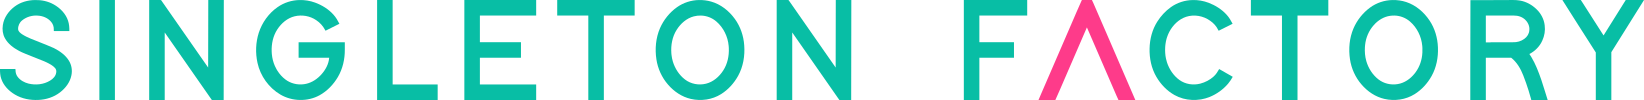 Singleton Factory Nur Text Logo